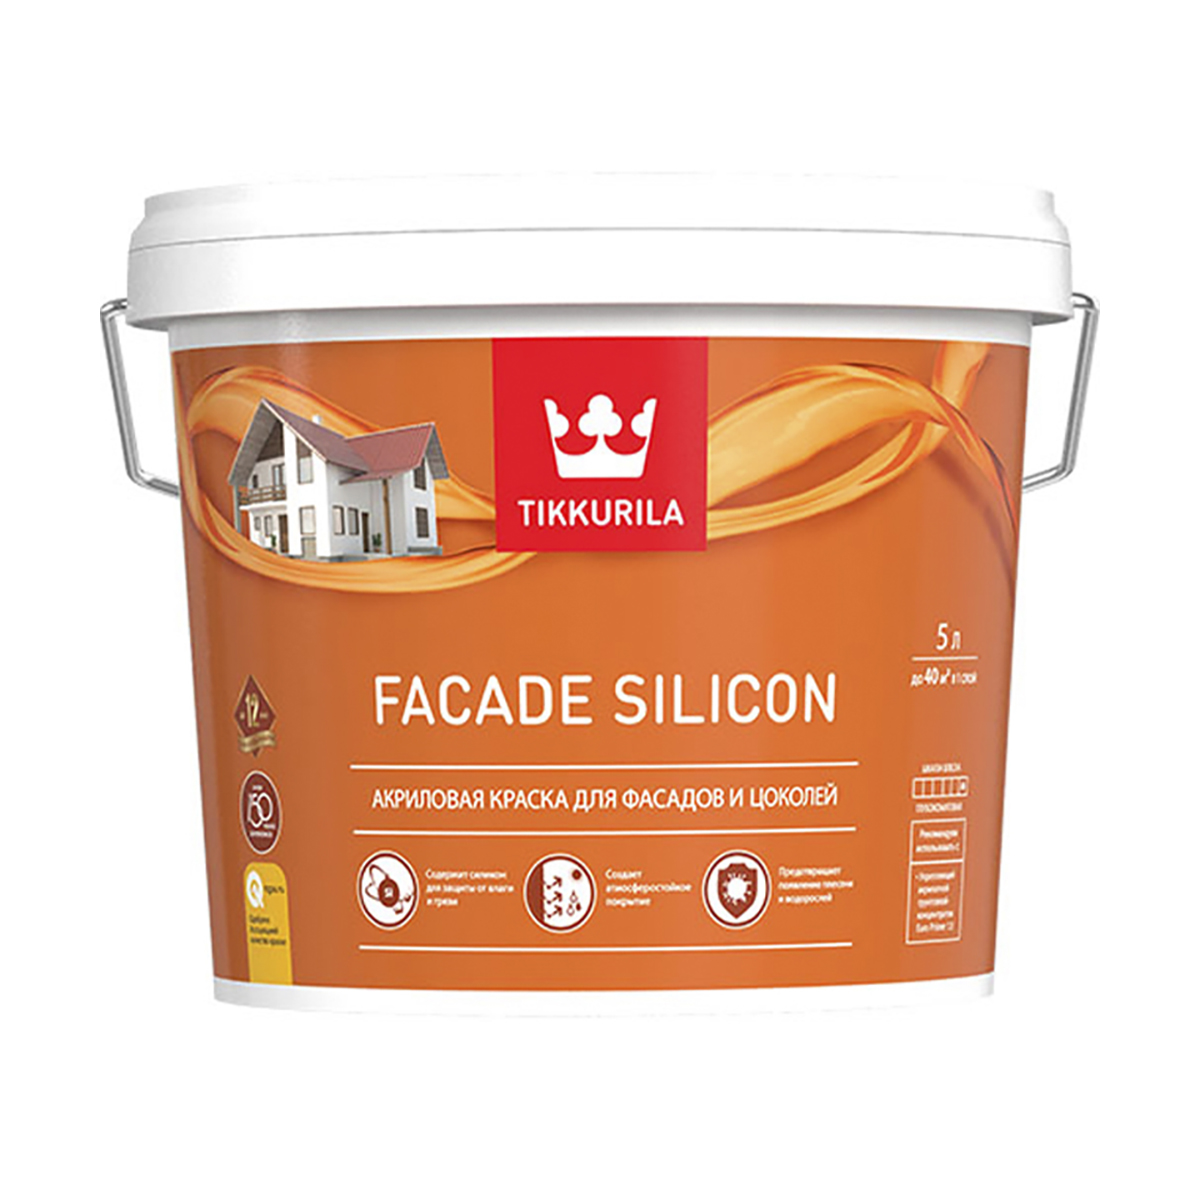 Краска Tikkurila Facade Silicon / Тиккурила Фасад Силикон для фасадов и .